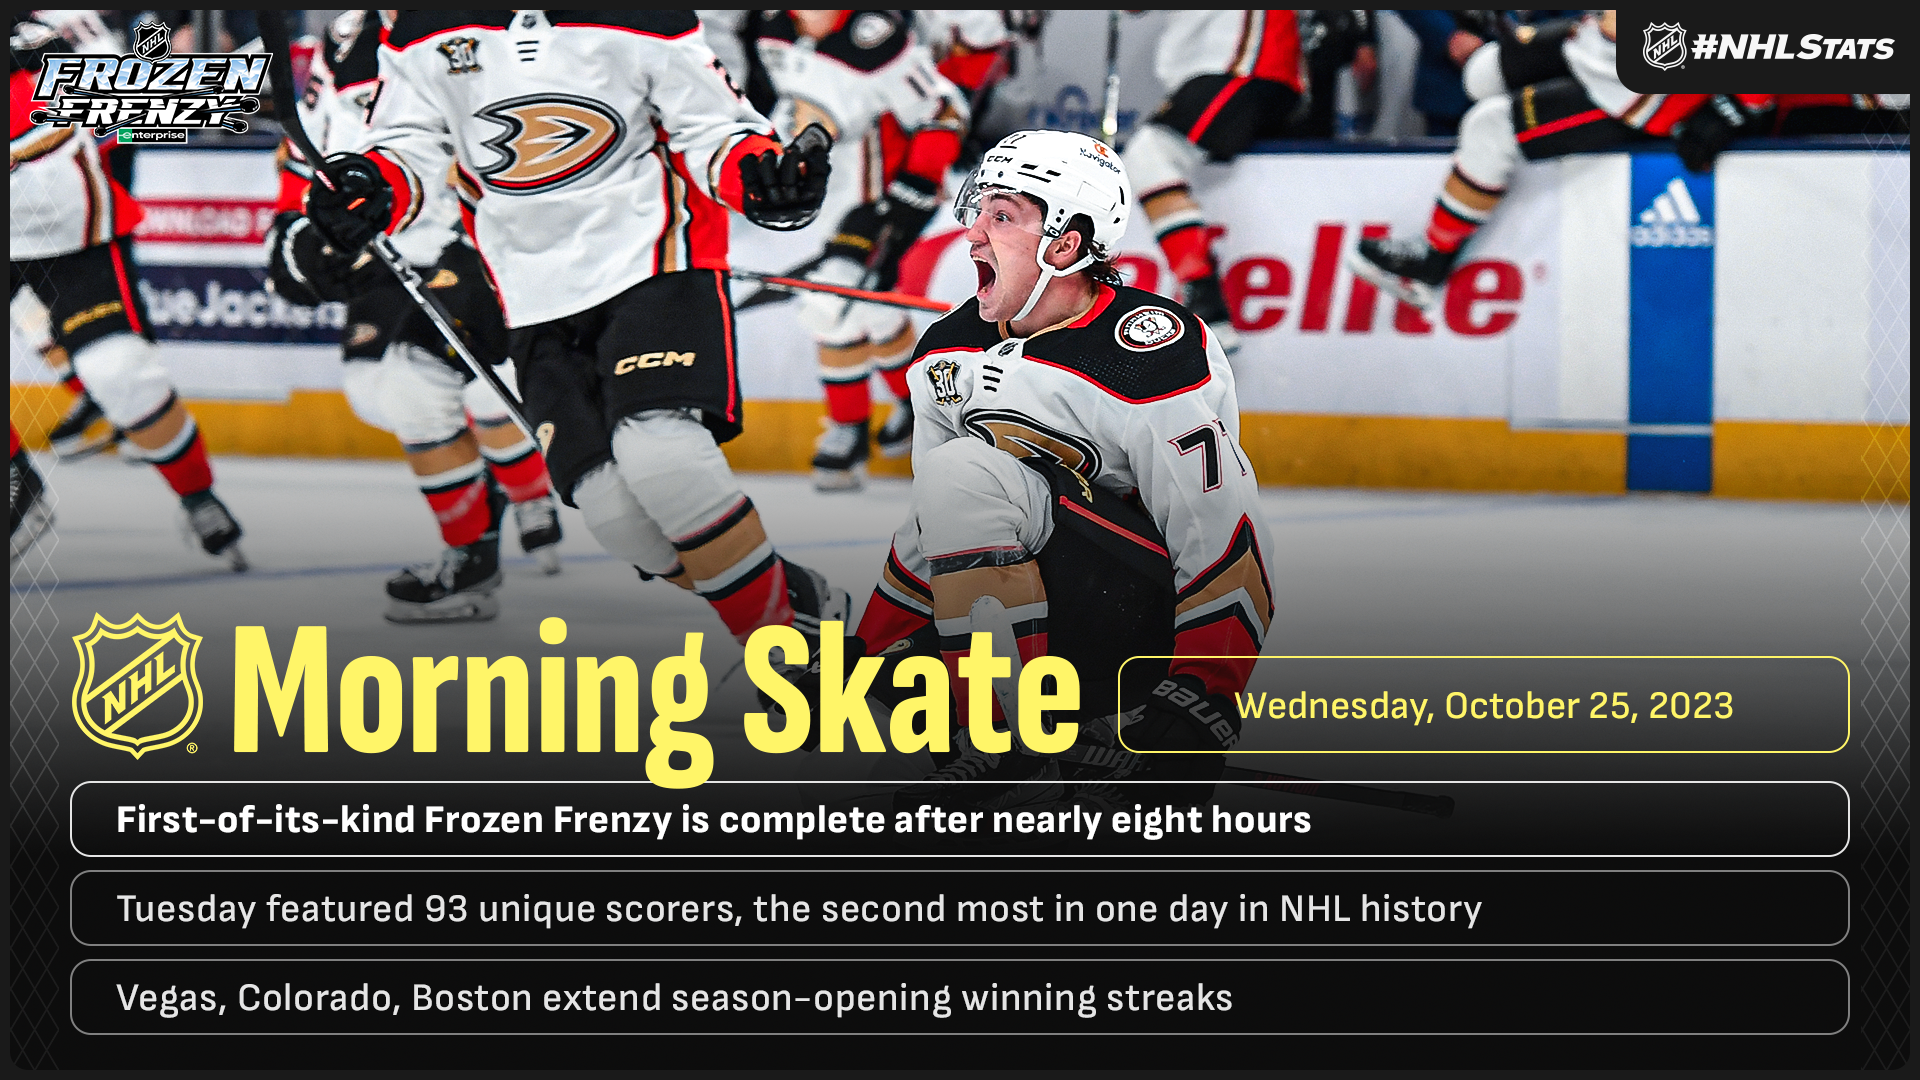 NHL.com Media Site - News - NHL Morning Skate – Feb. 8, 2021